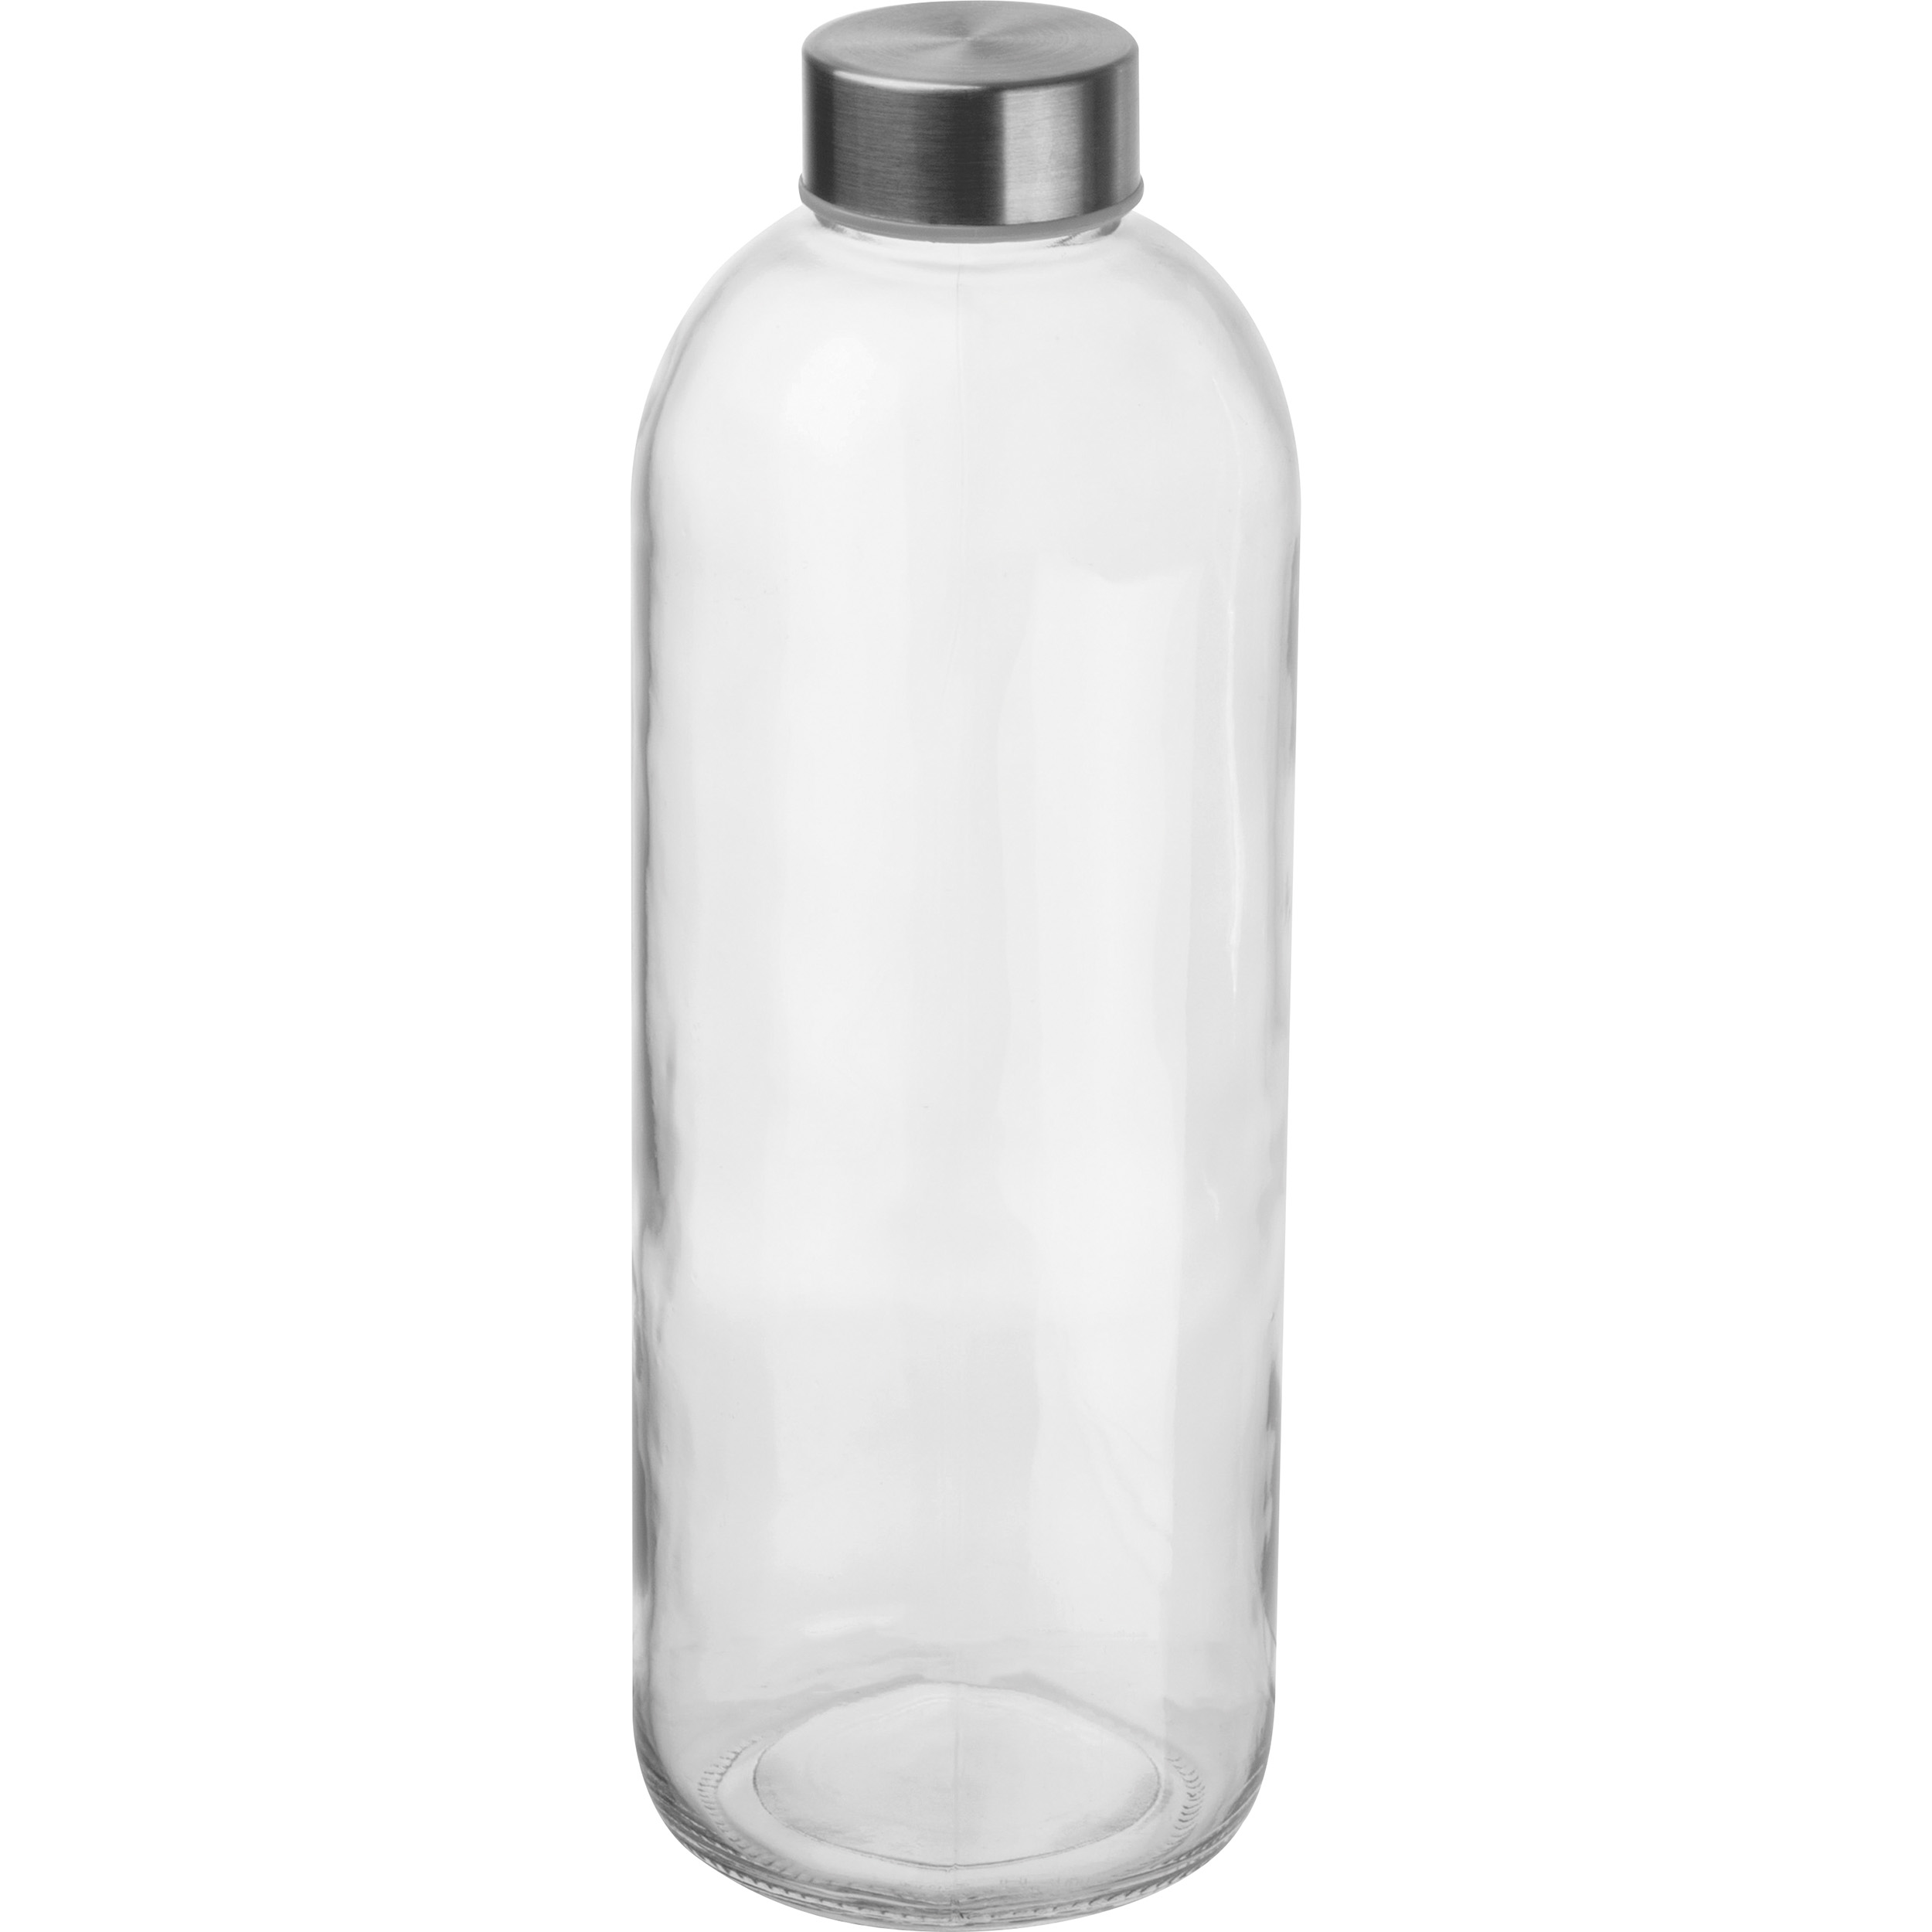 Botella de vidrio de 1 litro con funda de neopreno